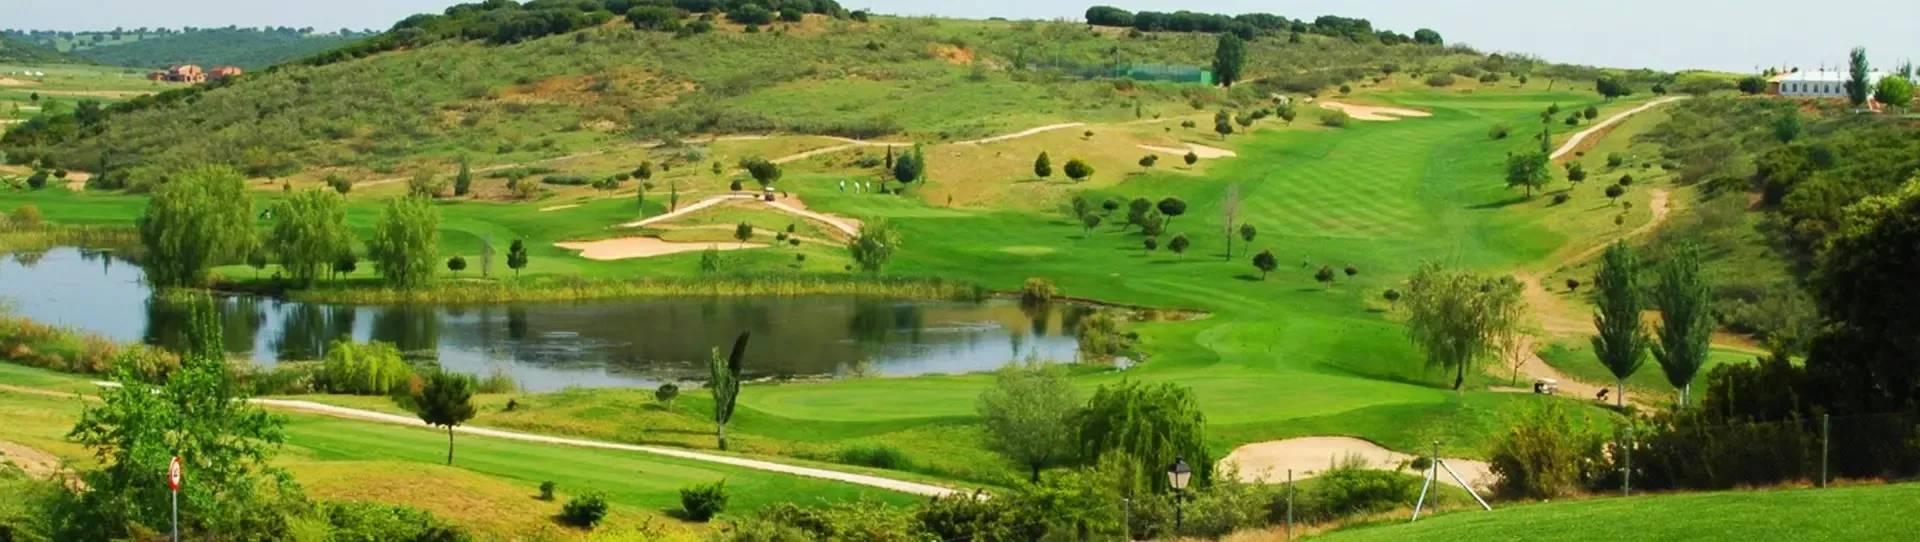 Spain golf courses - Cabanillas Guadalajara Golf Course - Photo 2